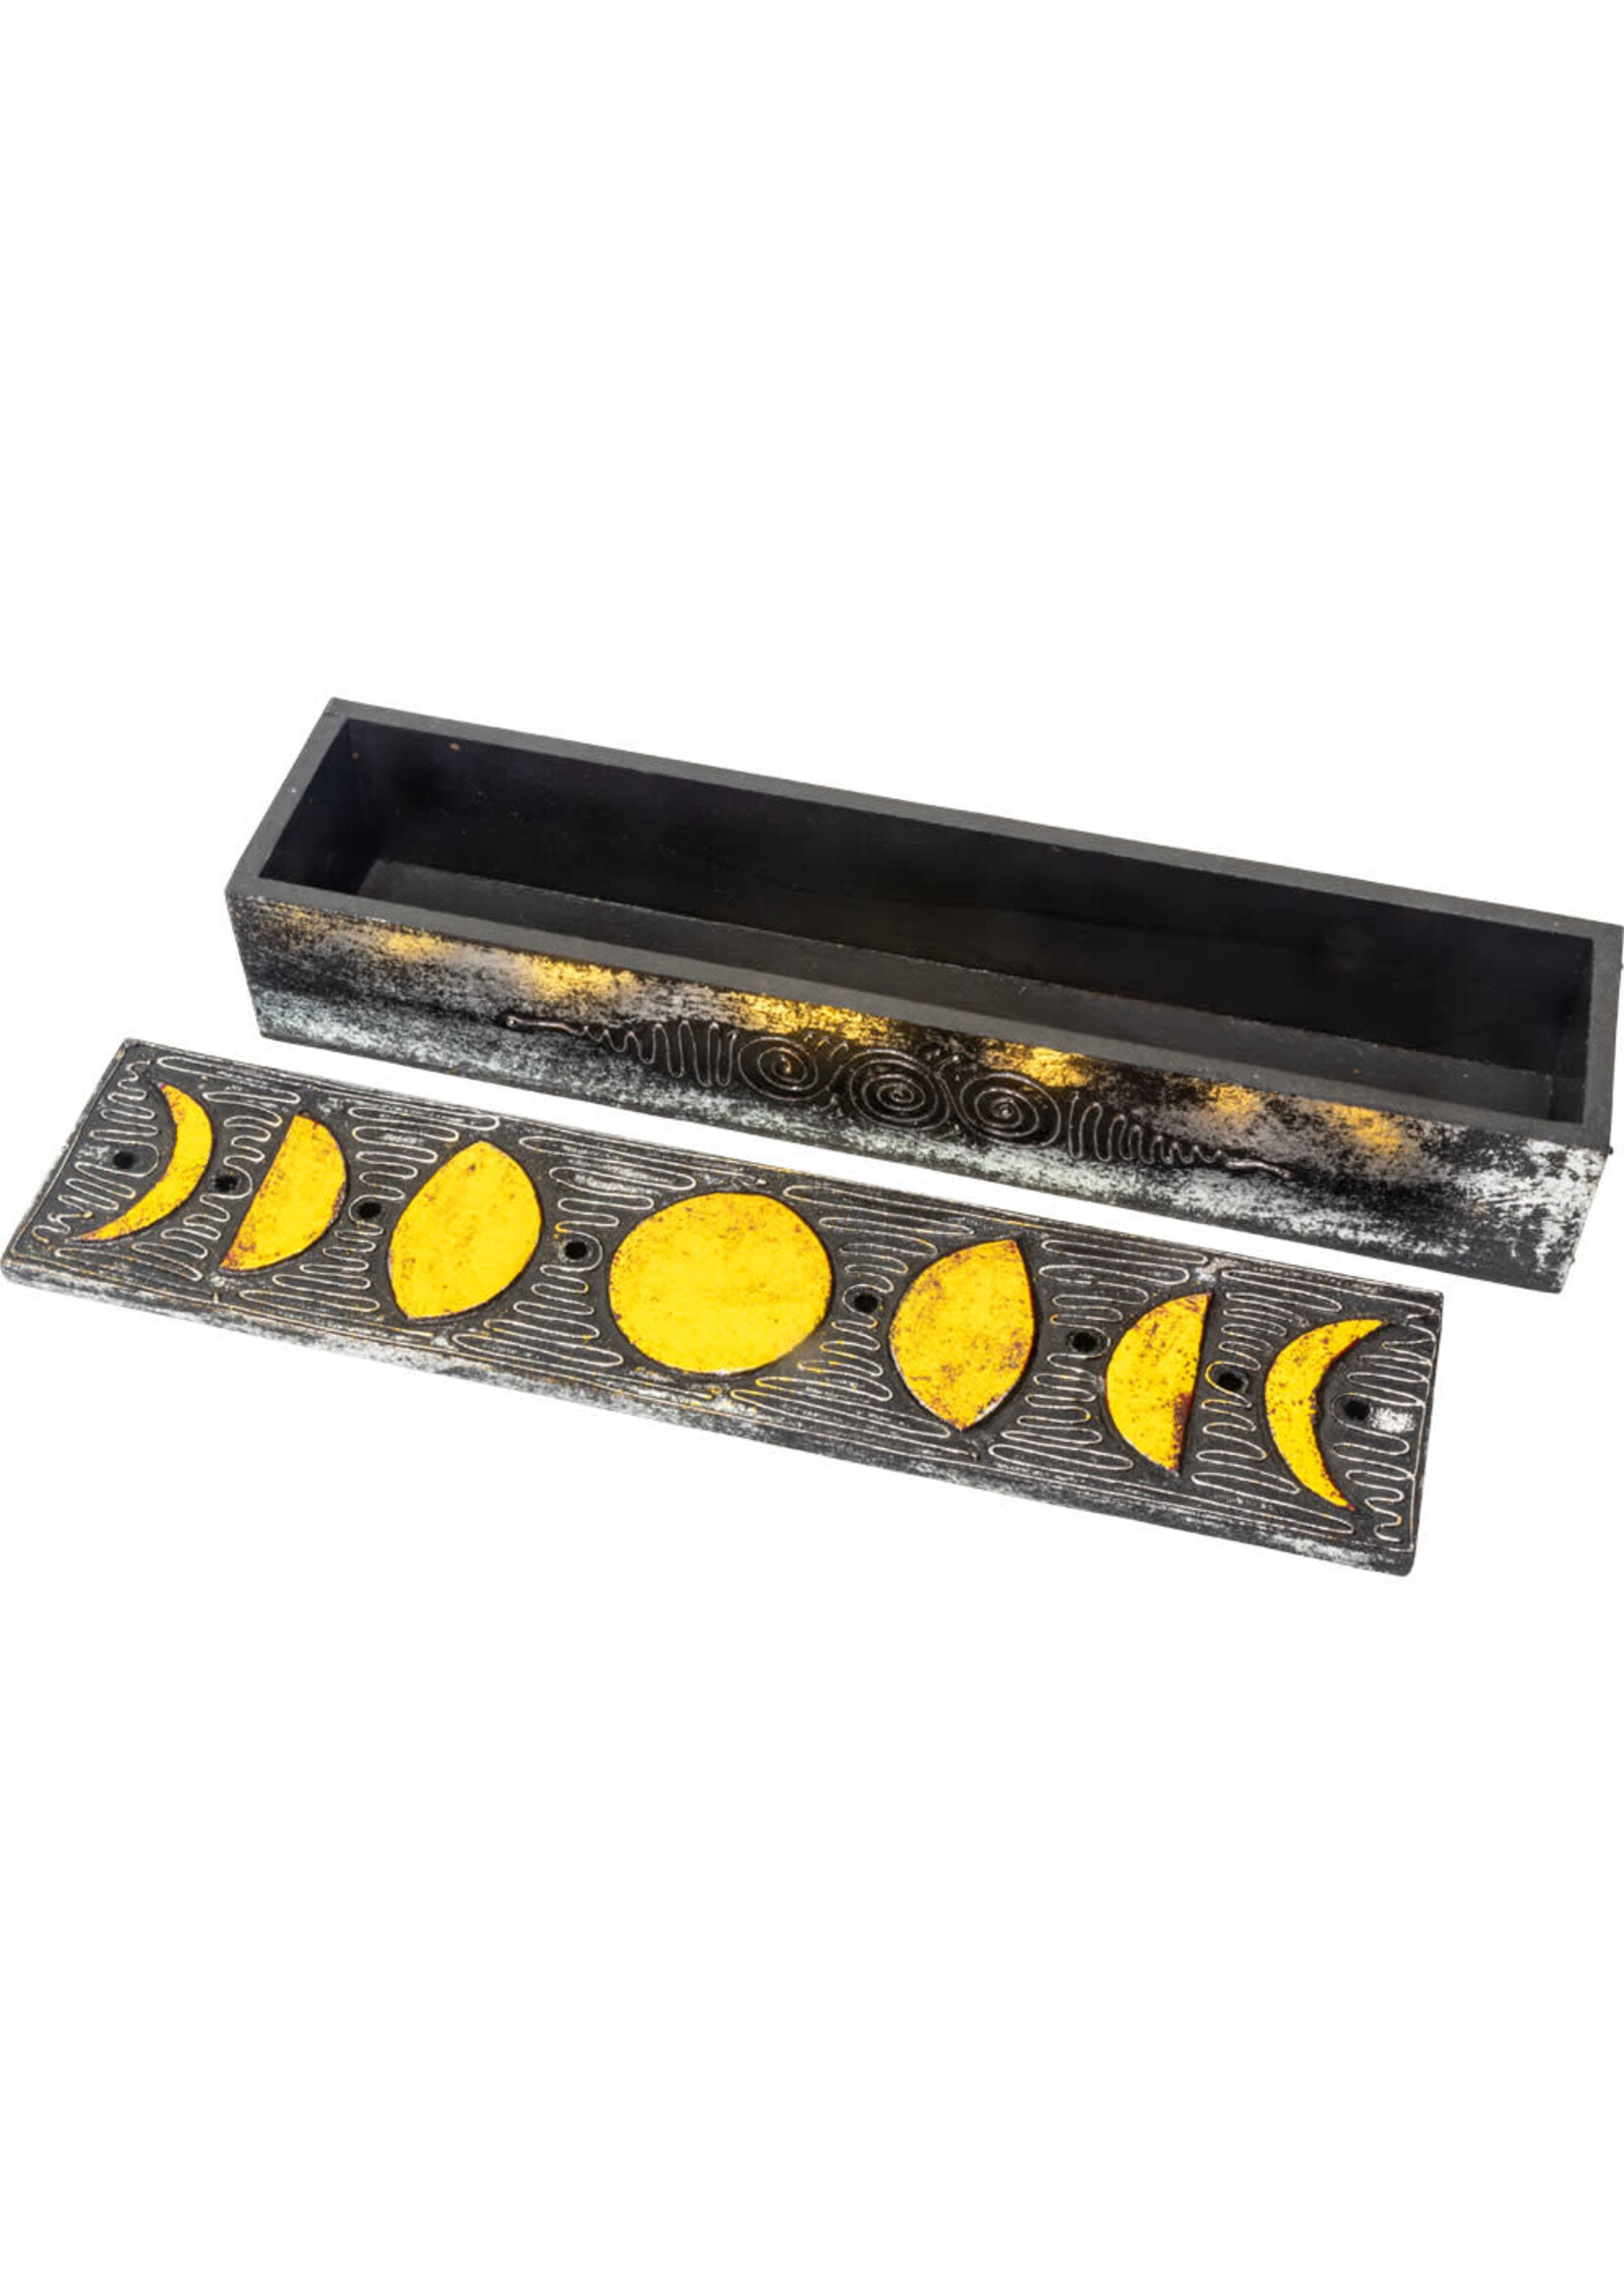 Wood Moon Phase Incense Storage Box